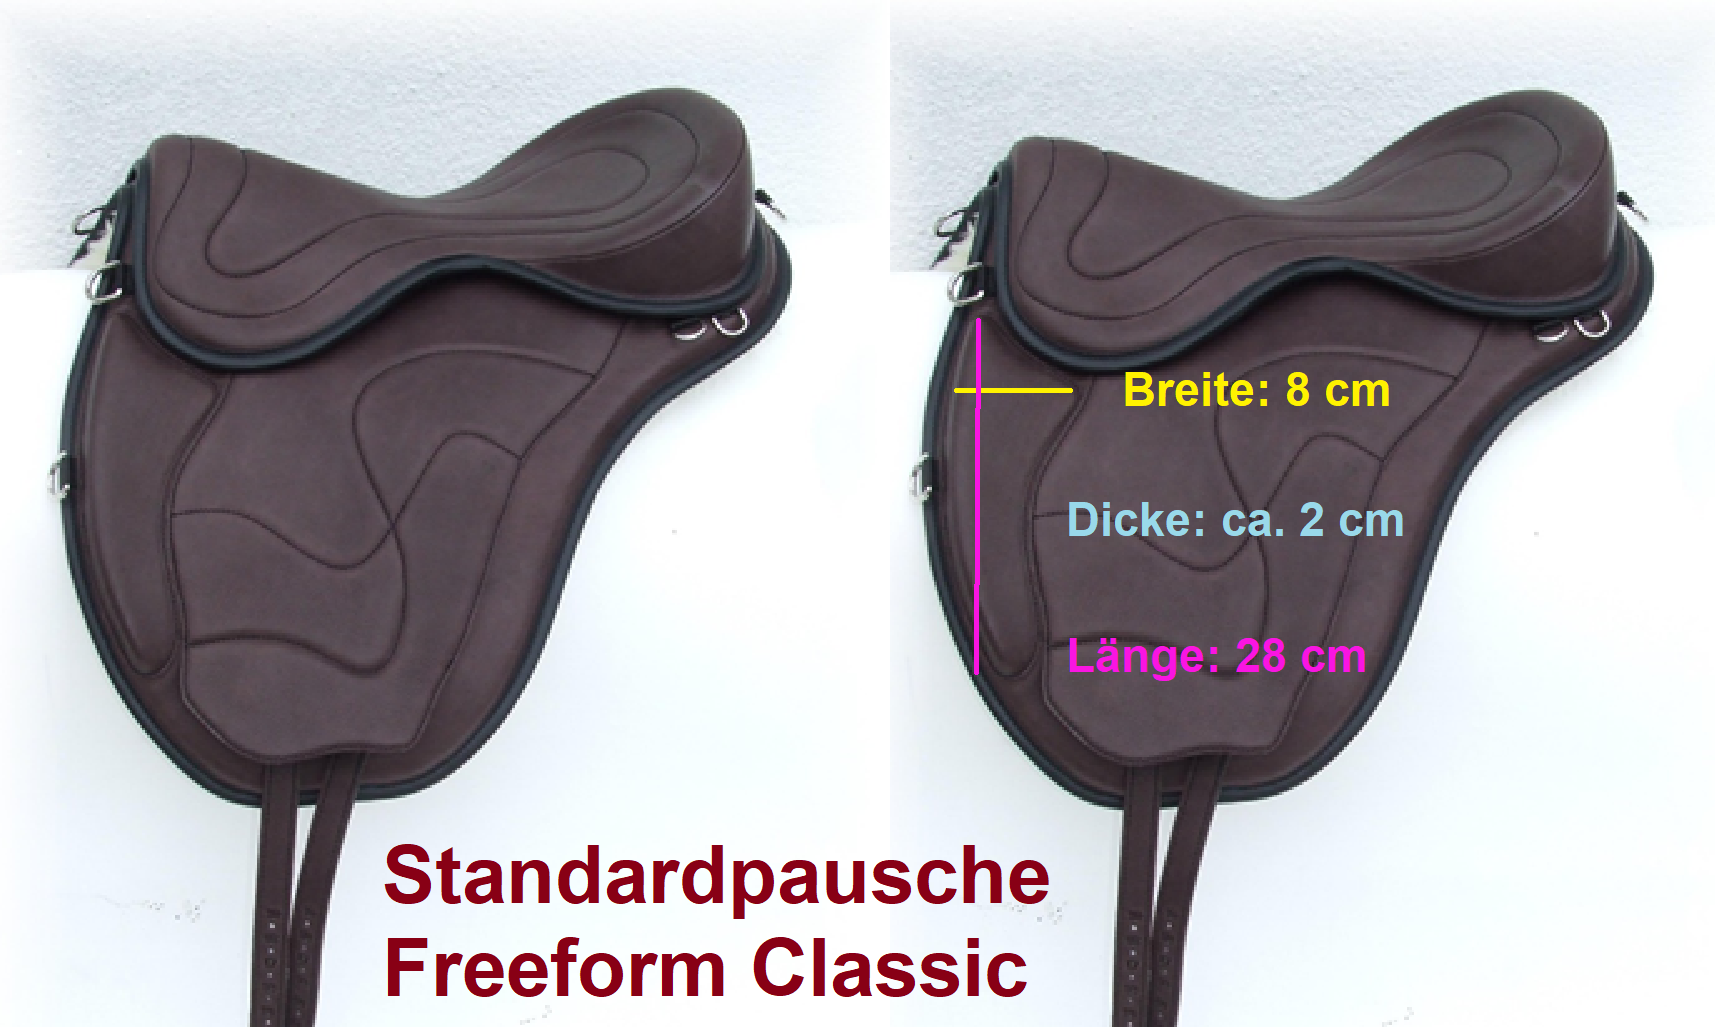 Standardpausche-Freeform-Classic